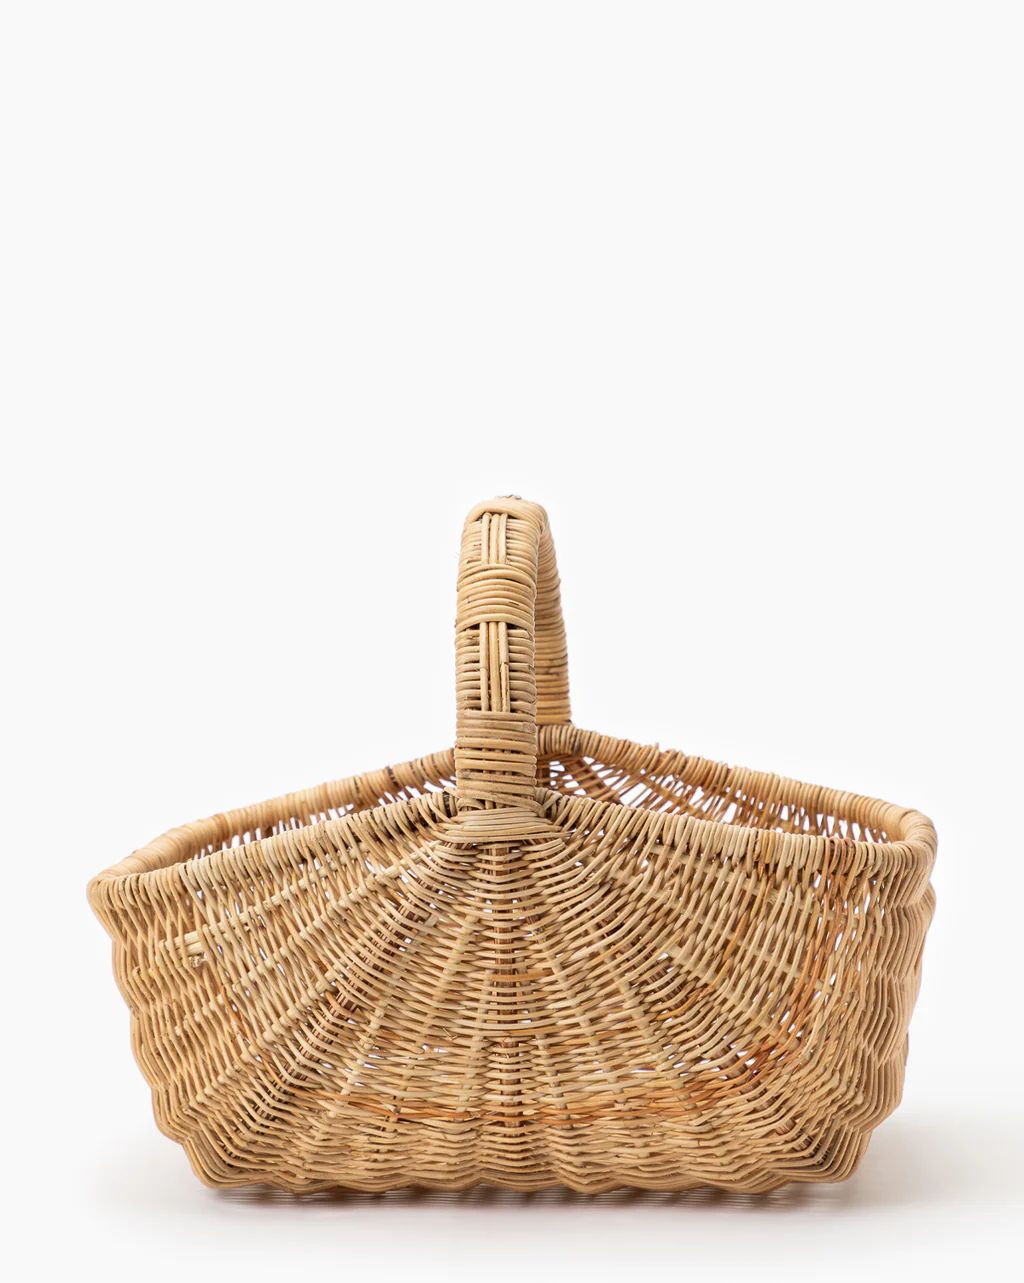 Handled Basket | McGee & Co.